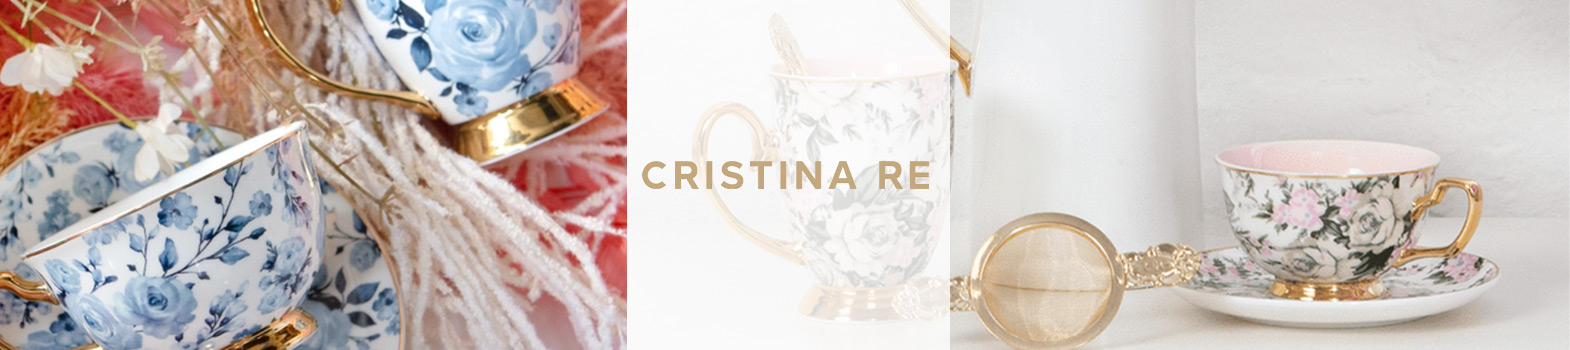 Cristina Re